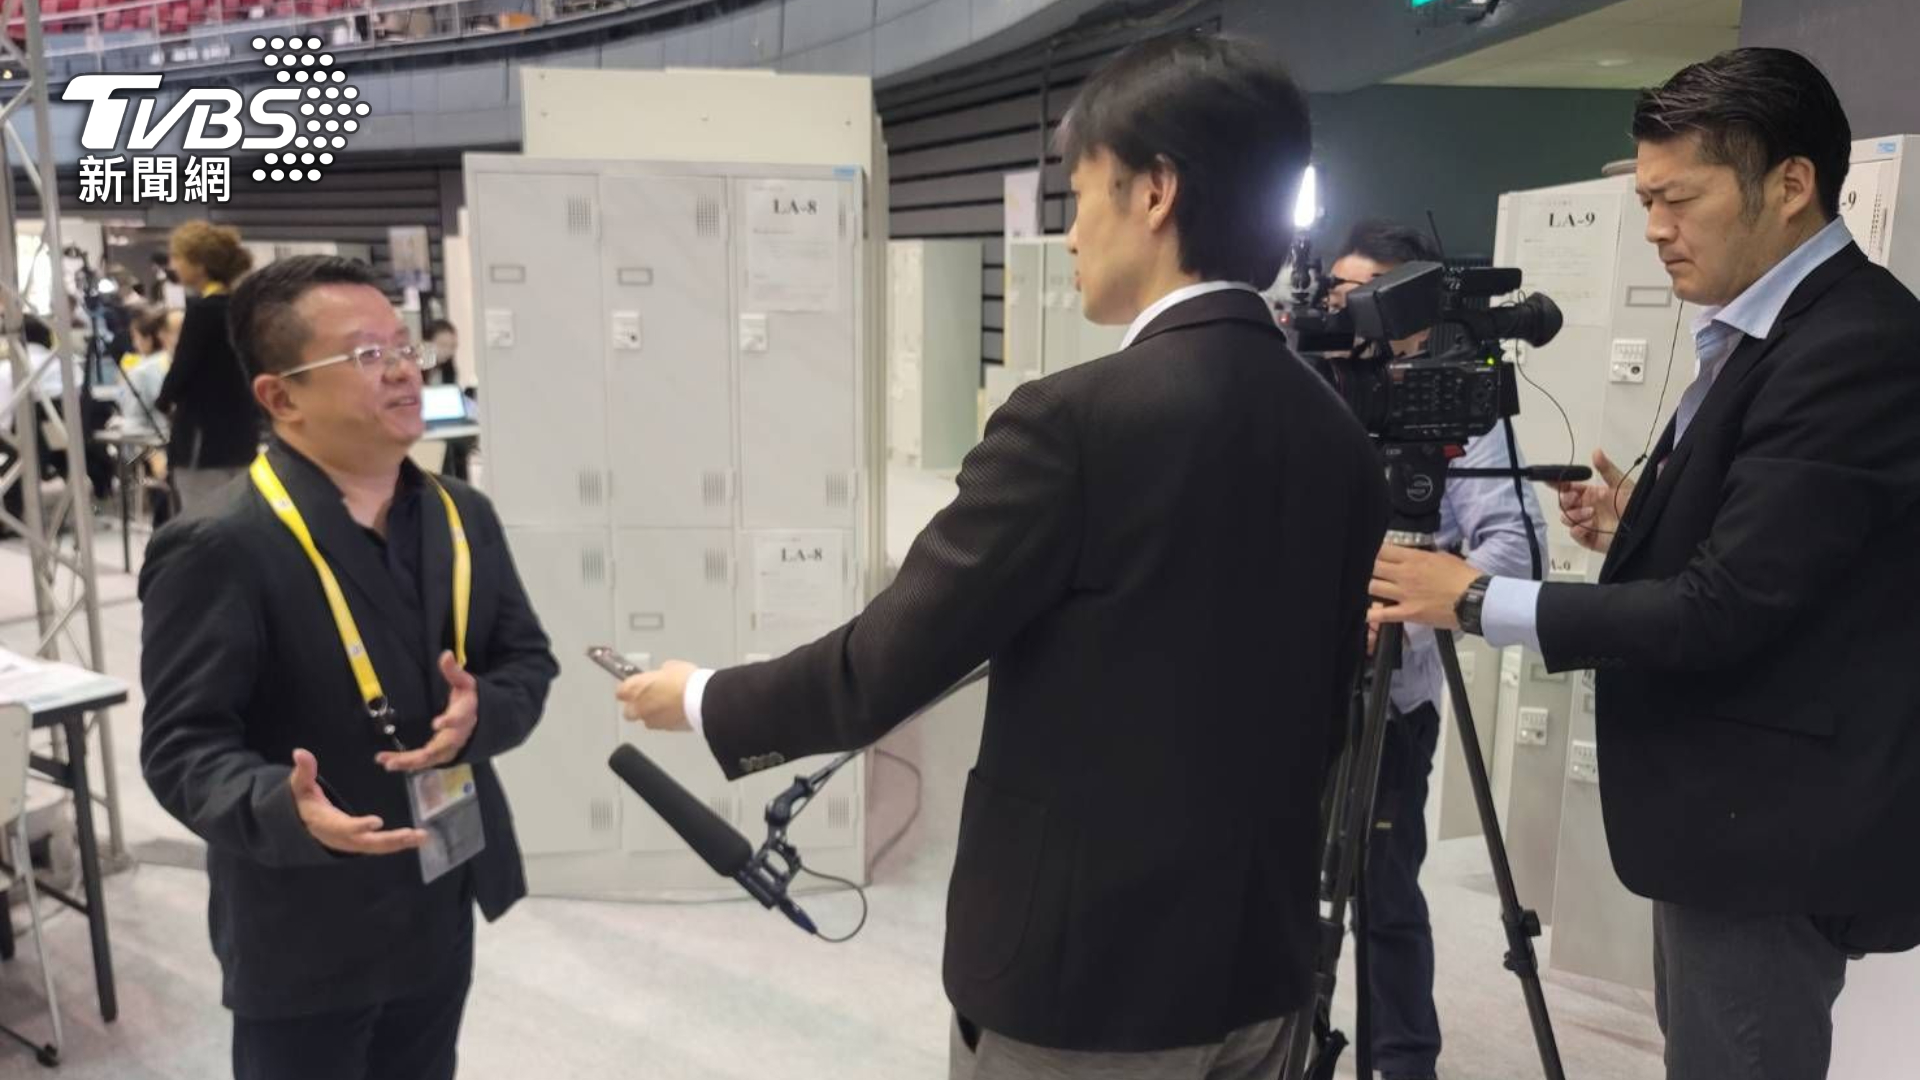 TVBS採訪中心國際組副組長郭展毓於廣島報導G7峰會時，接受NHK採訪並以台灣角度觀察這次峰會議題 (圖/TVBS)